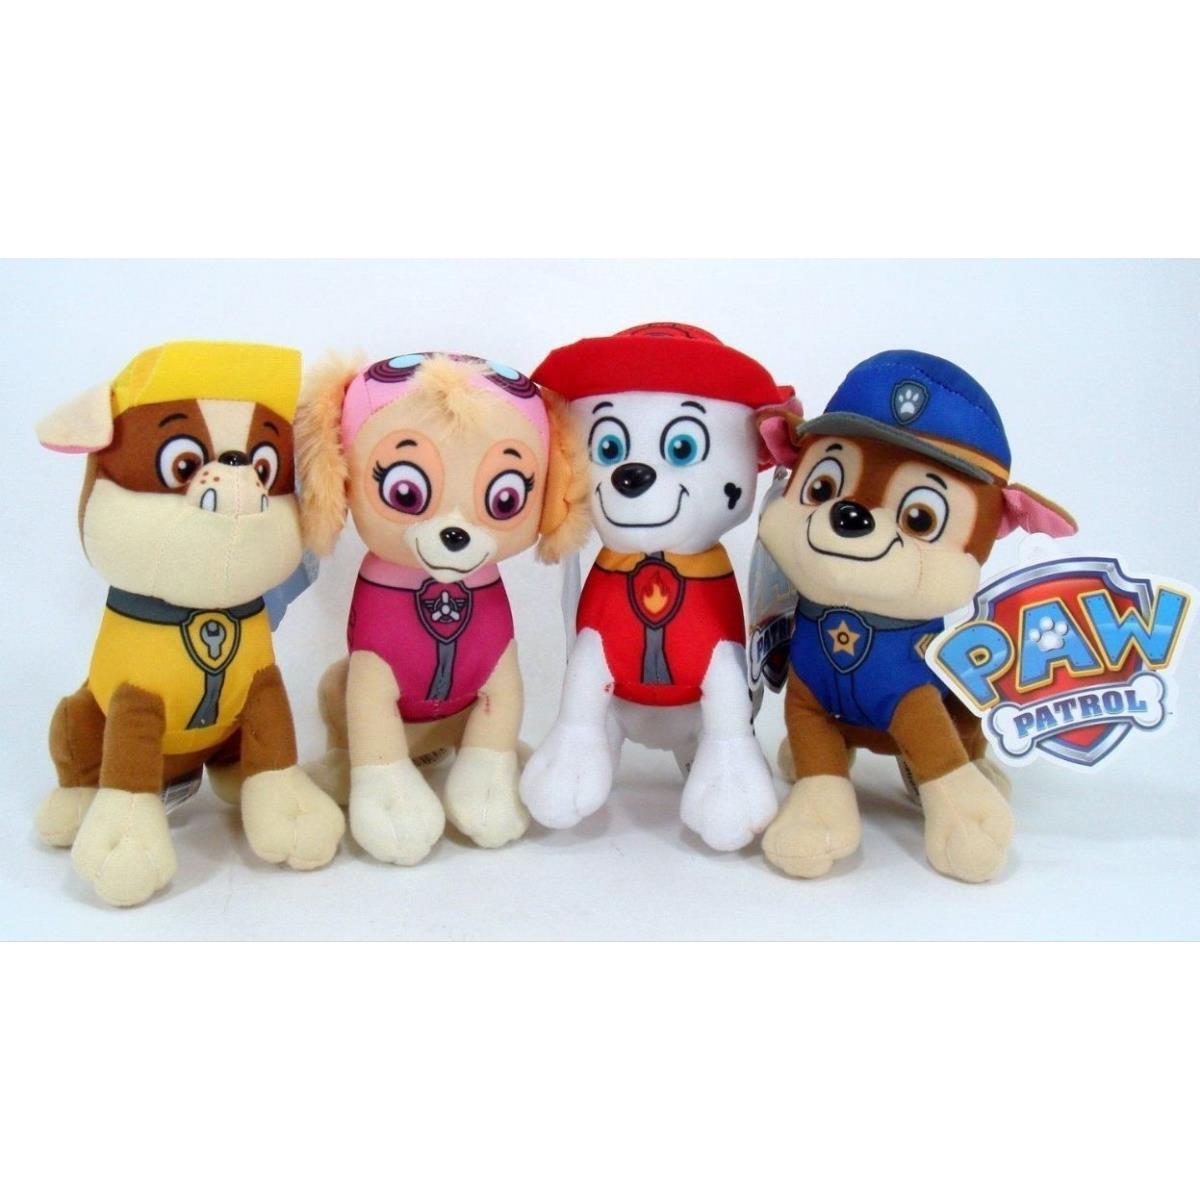 Custom slicc80 10 Sets 8 Paw Patrol Plush Stuffed Animal Toy Set: